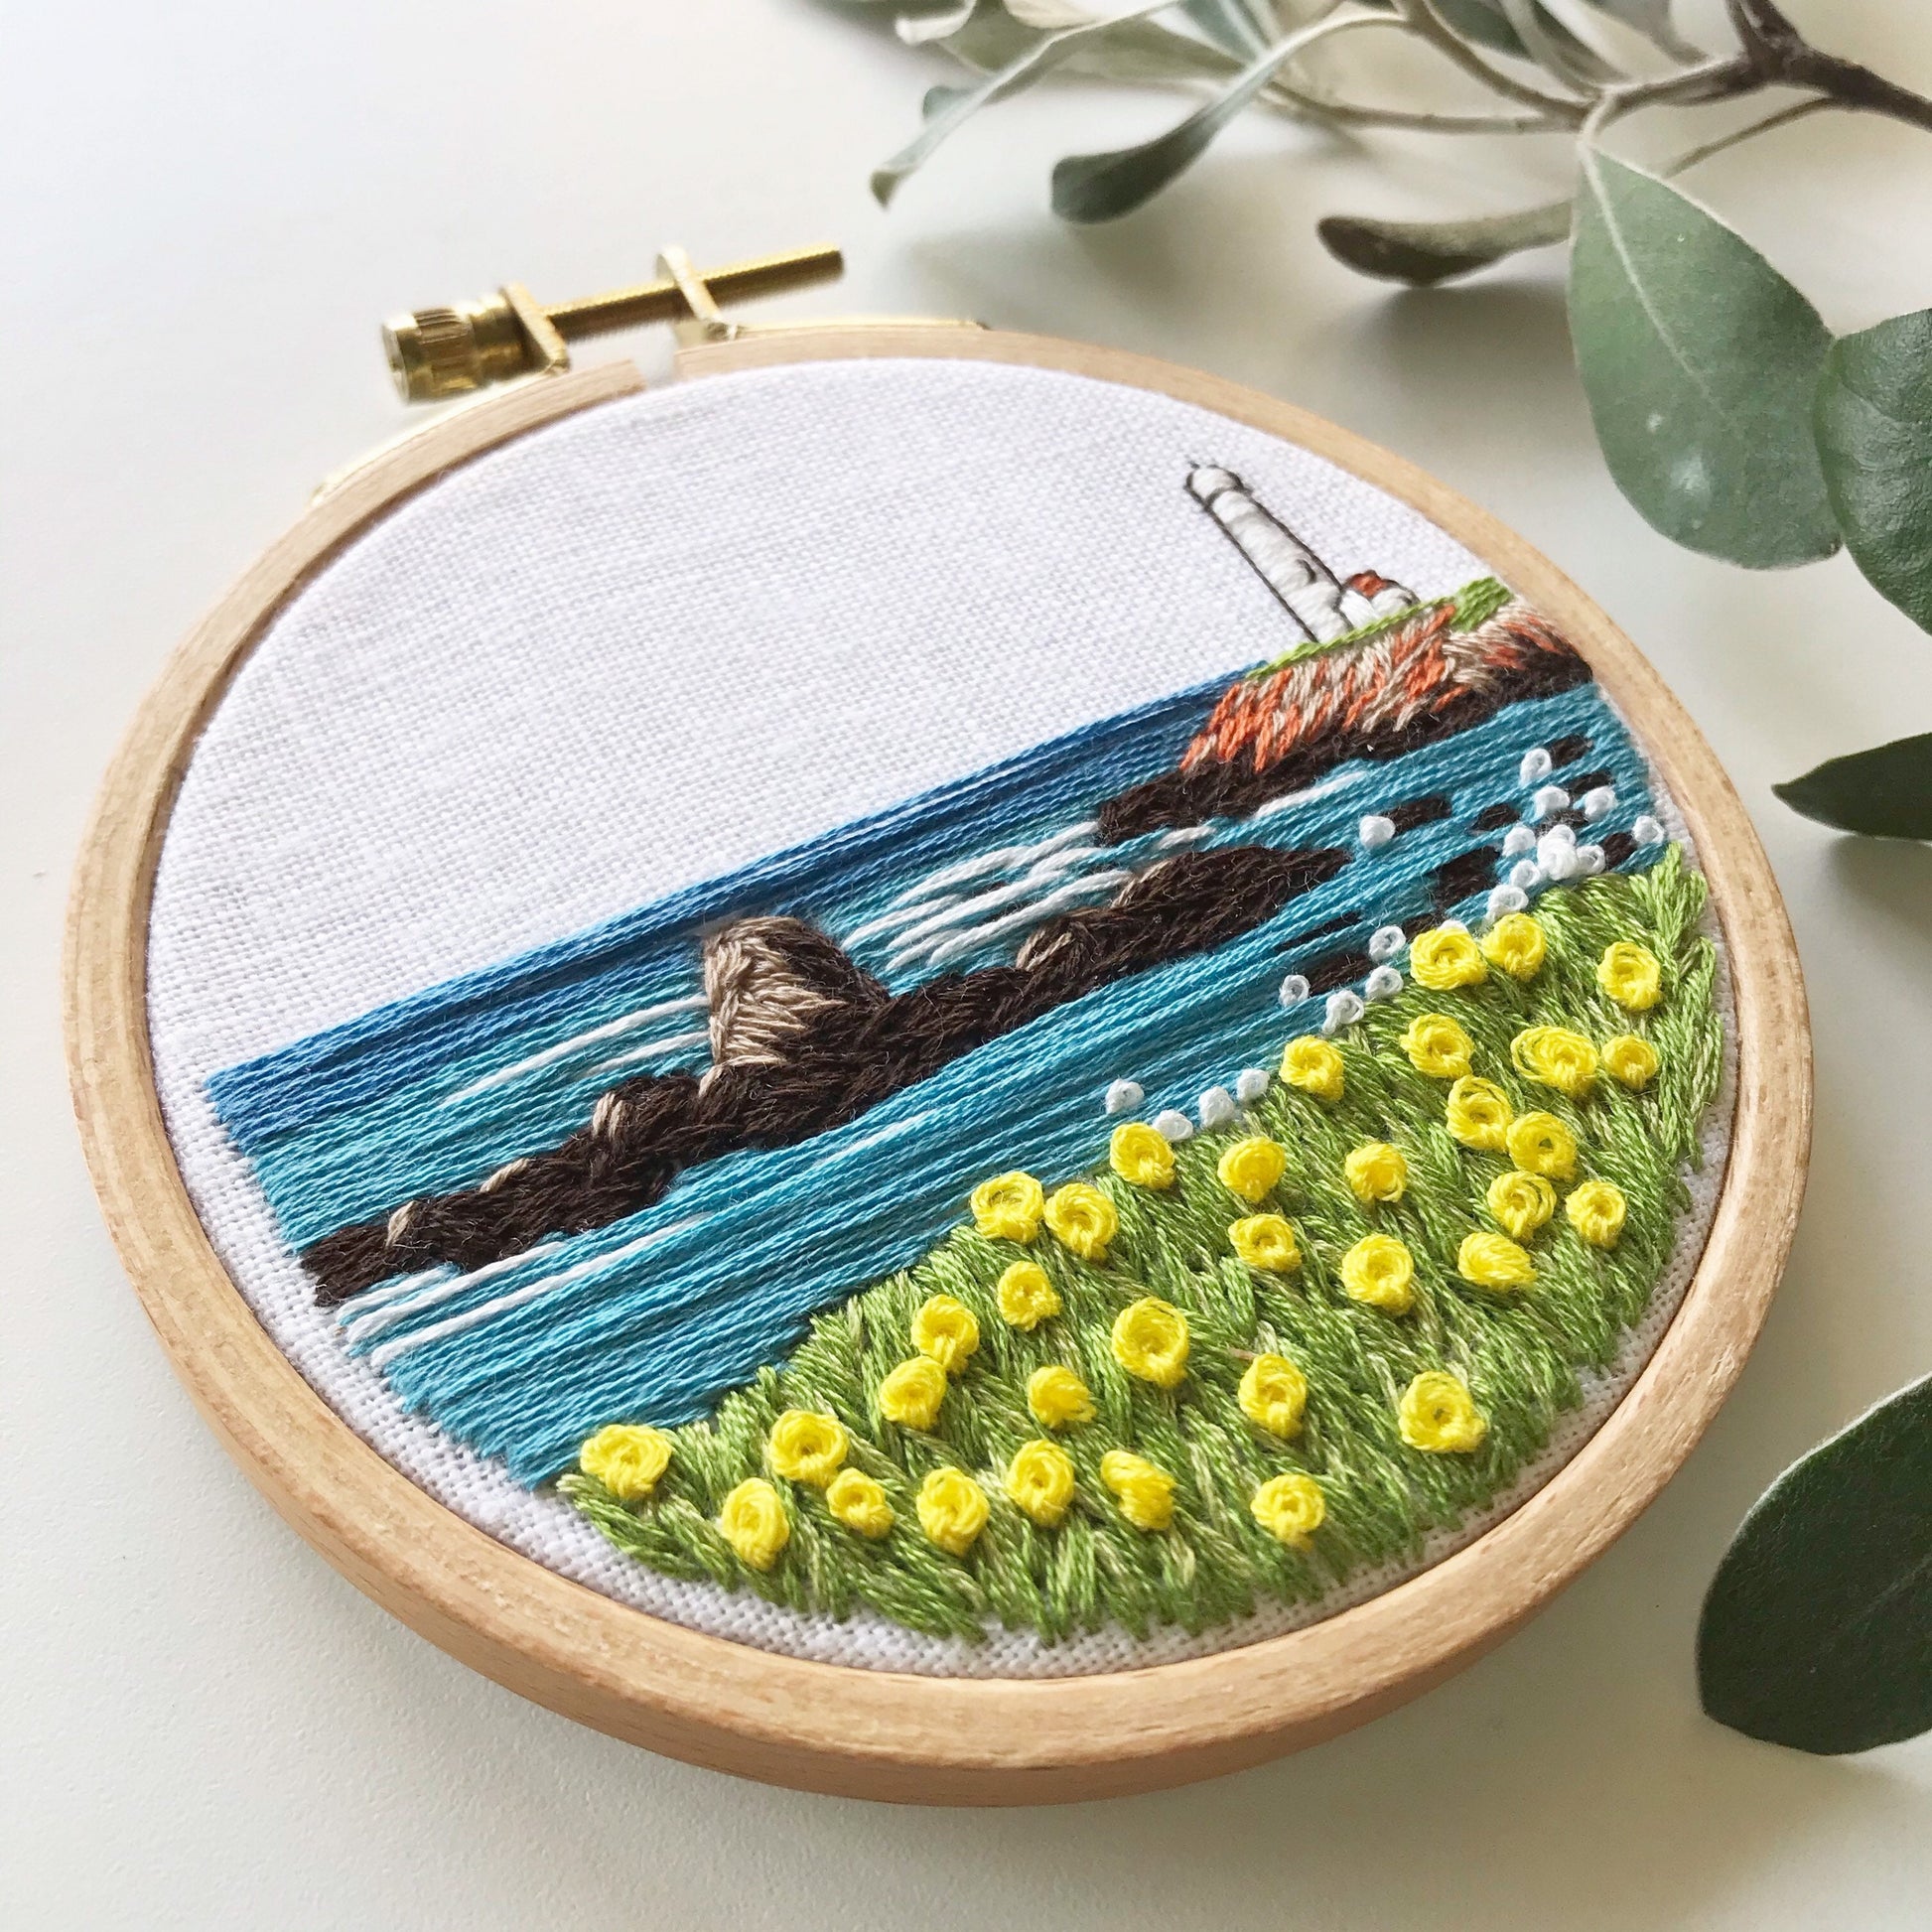 DIY Flower Embroidery Kit for Beginner, Modern Scenery Embroidery